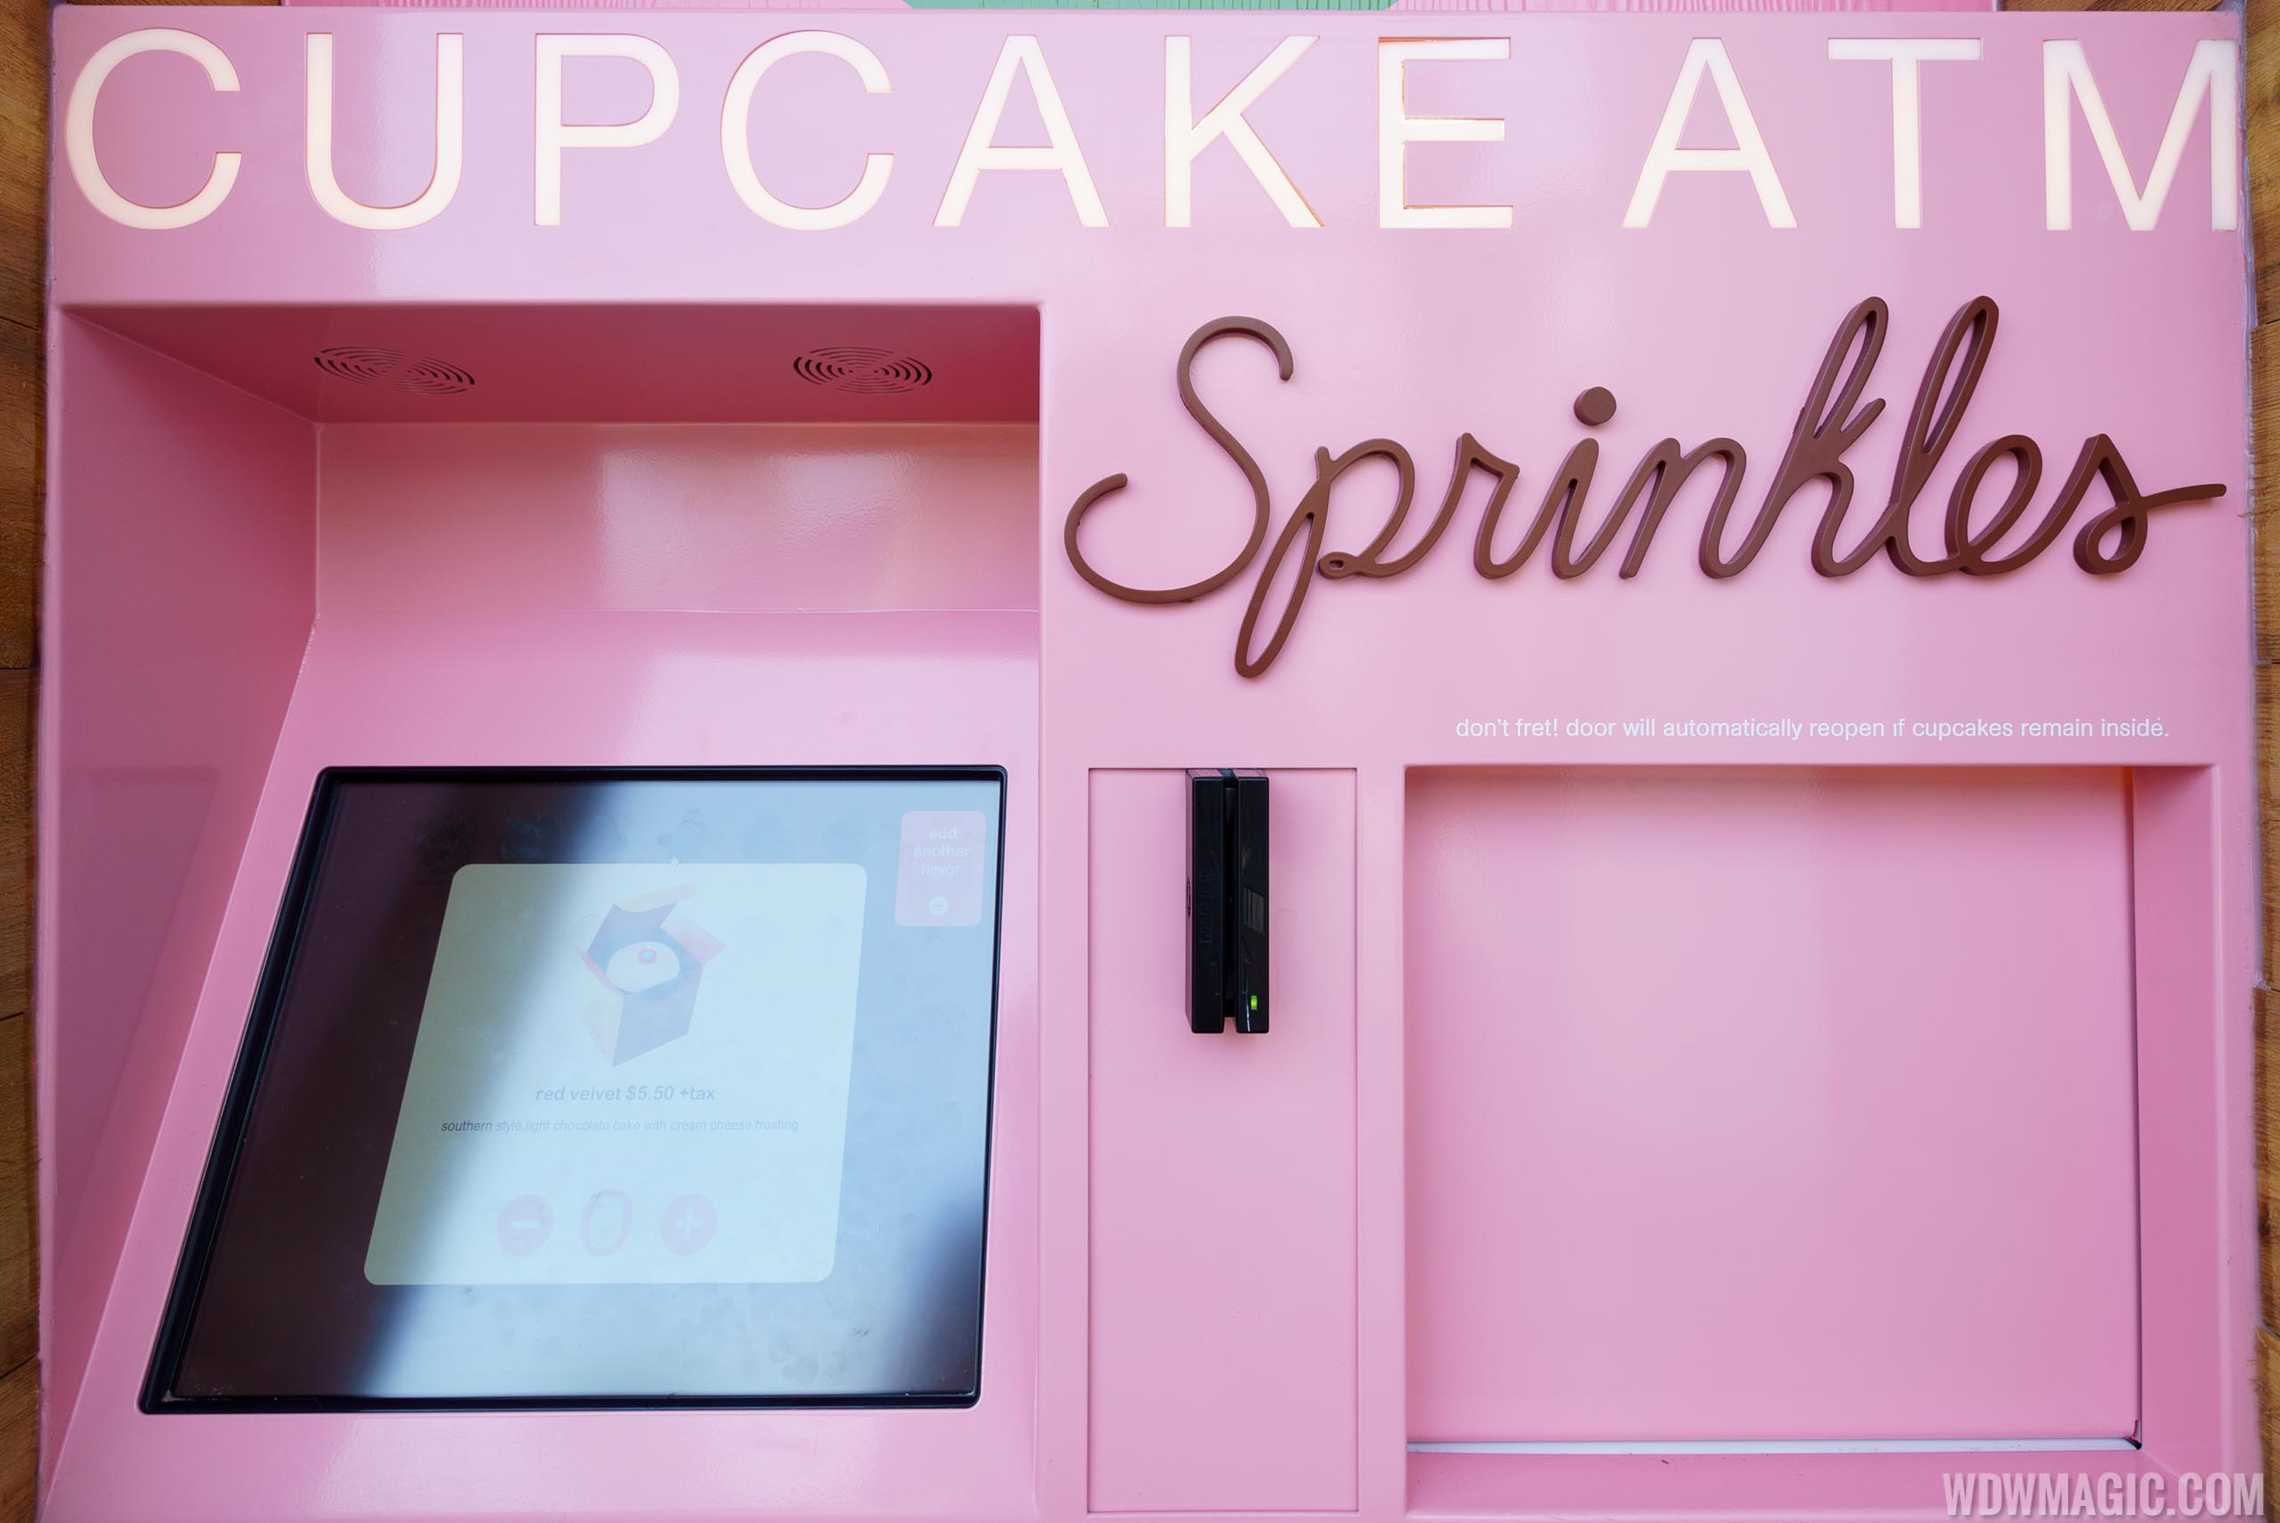 Sprinkles Cupcake Atm Cost